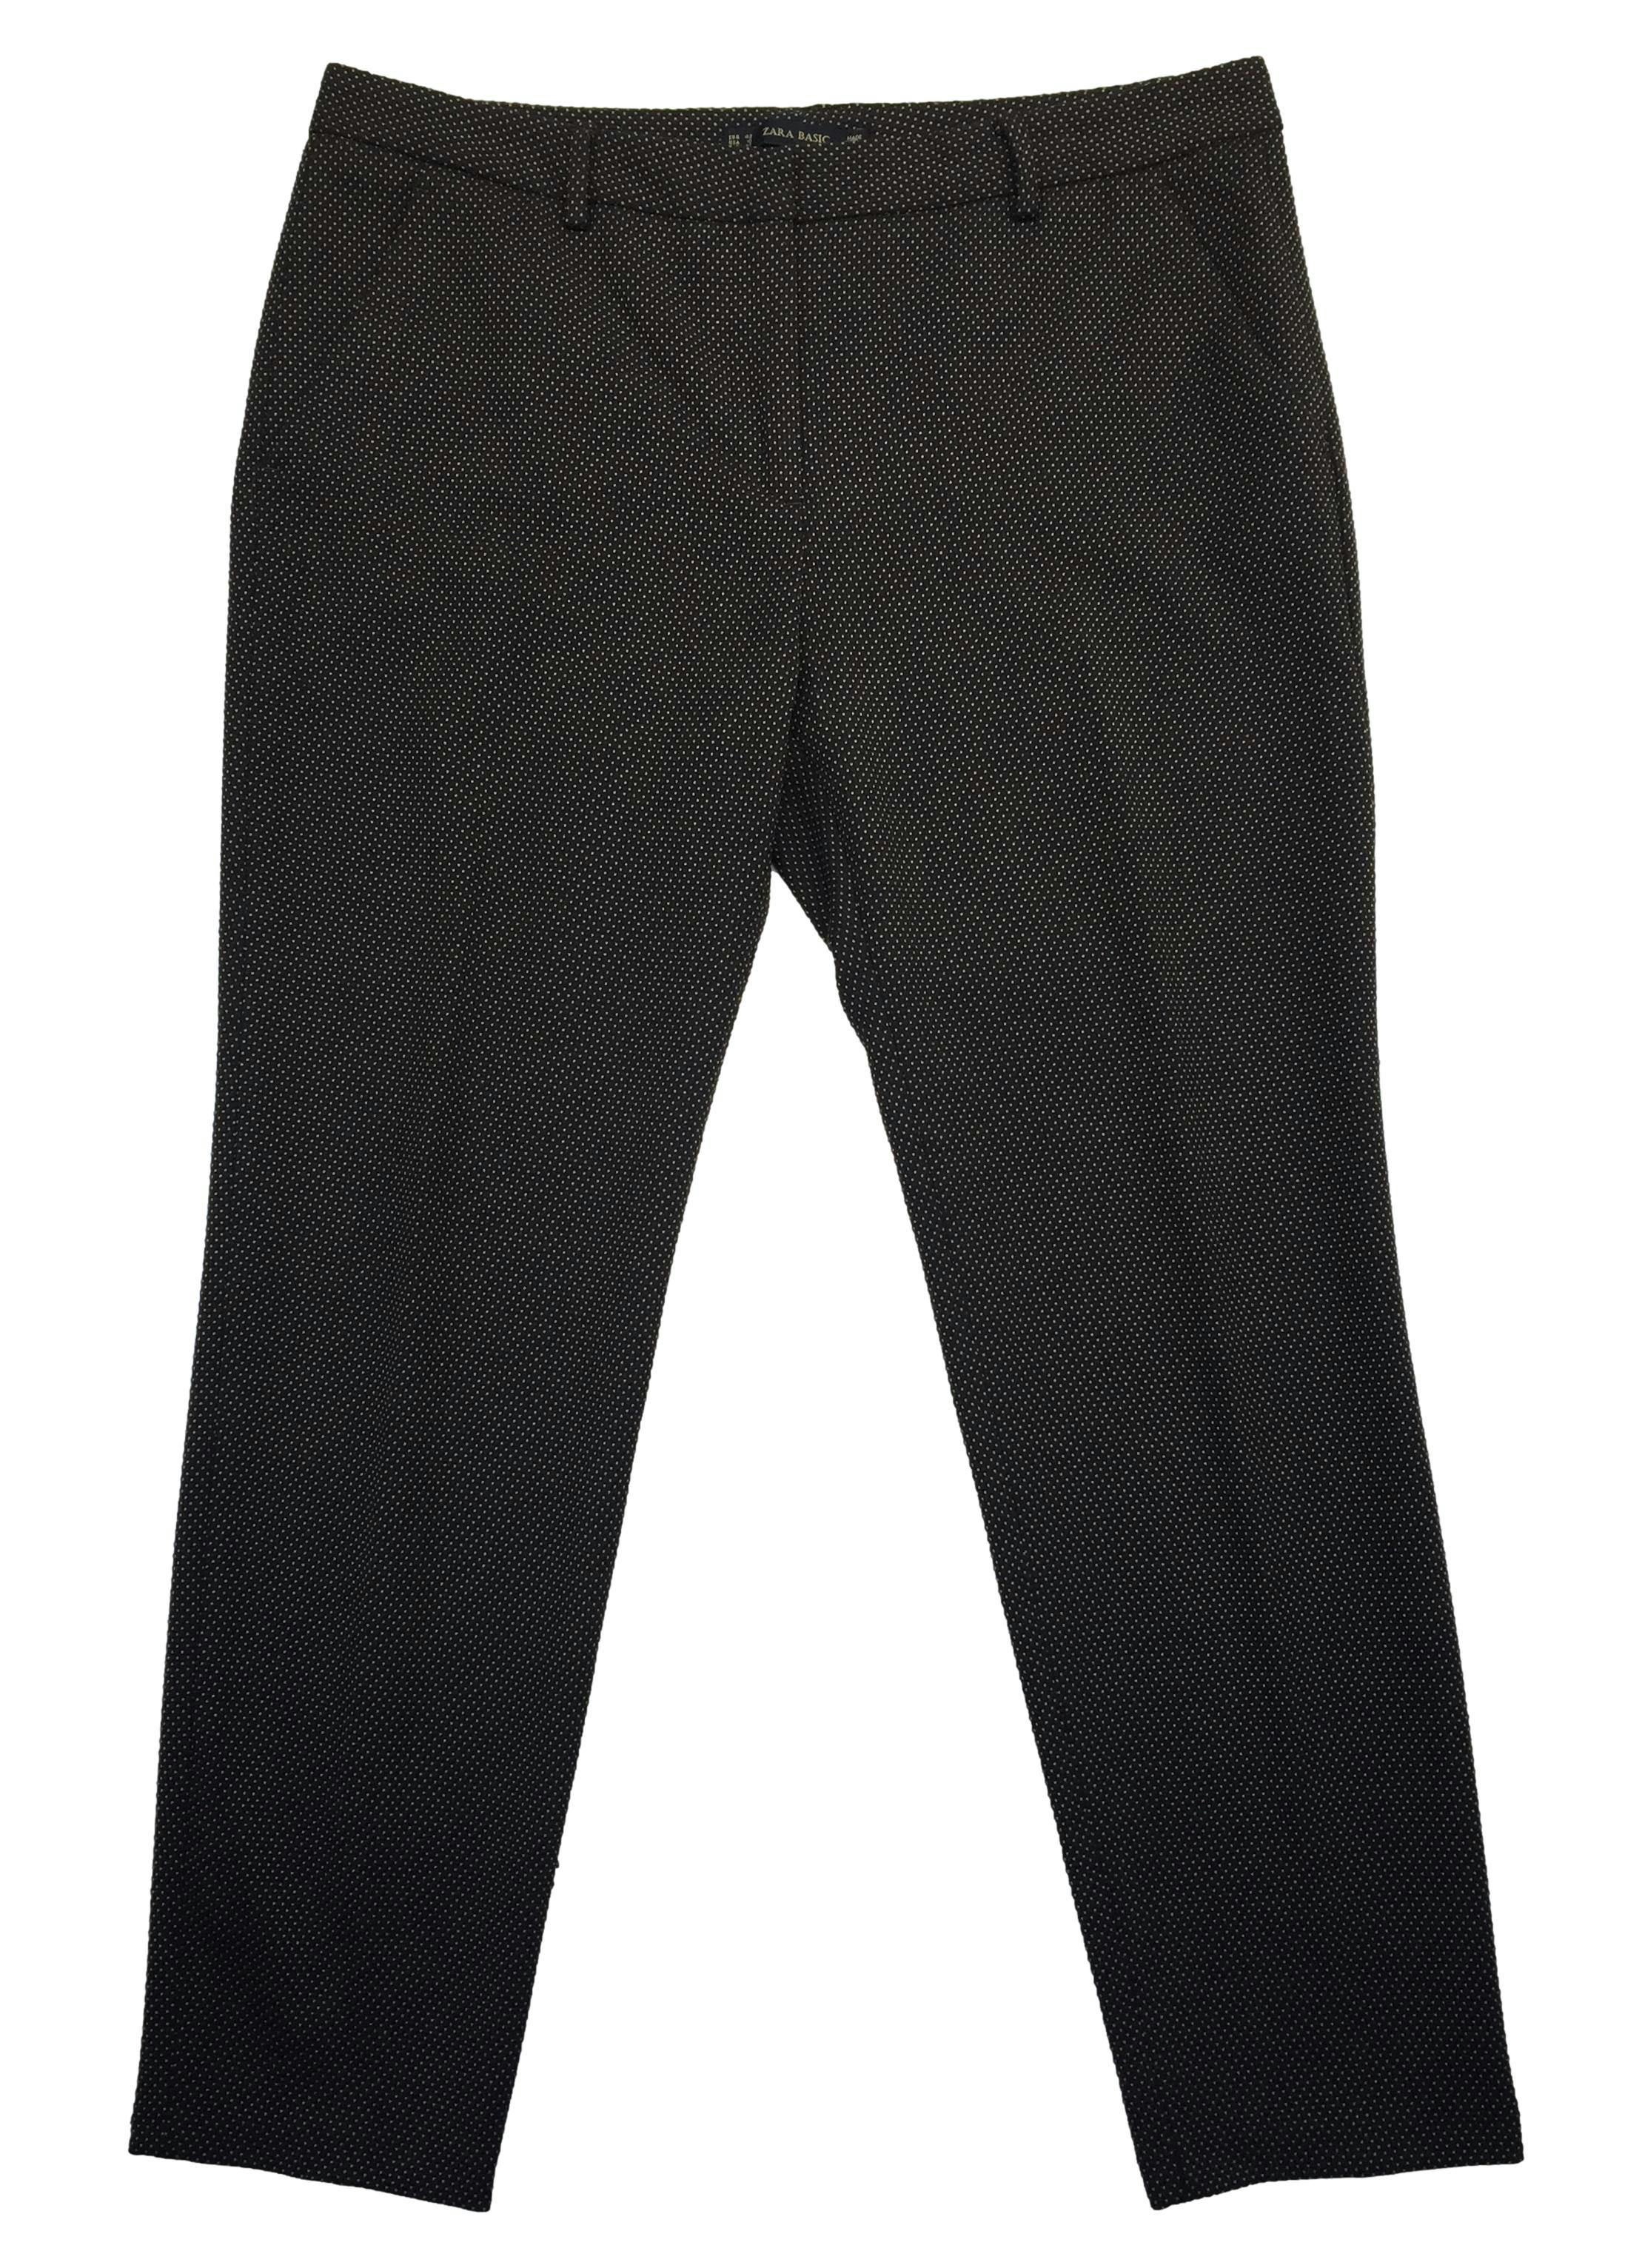 Pantalón Zara marrón con puntitos beige, corte slim. Cintura 88cm Tiro 25cm Largo 92cm